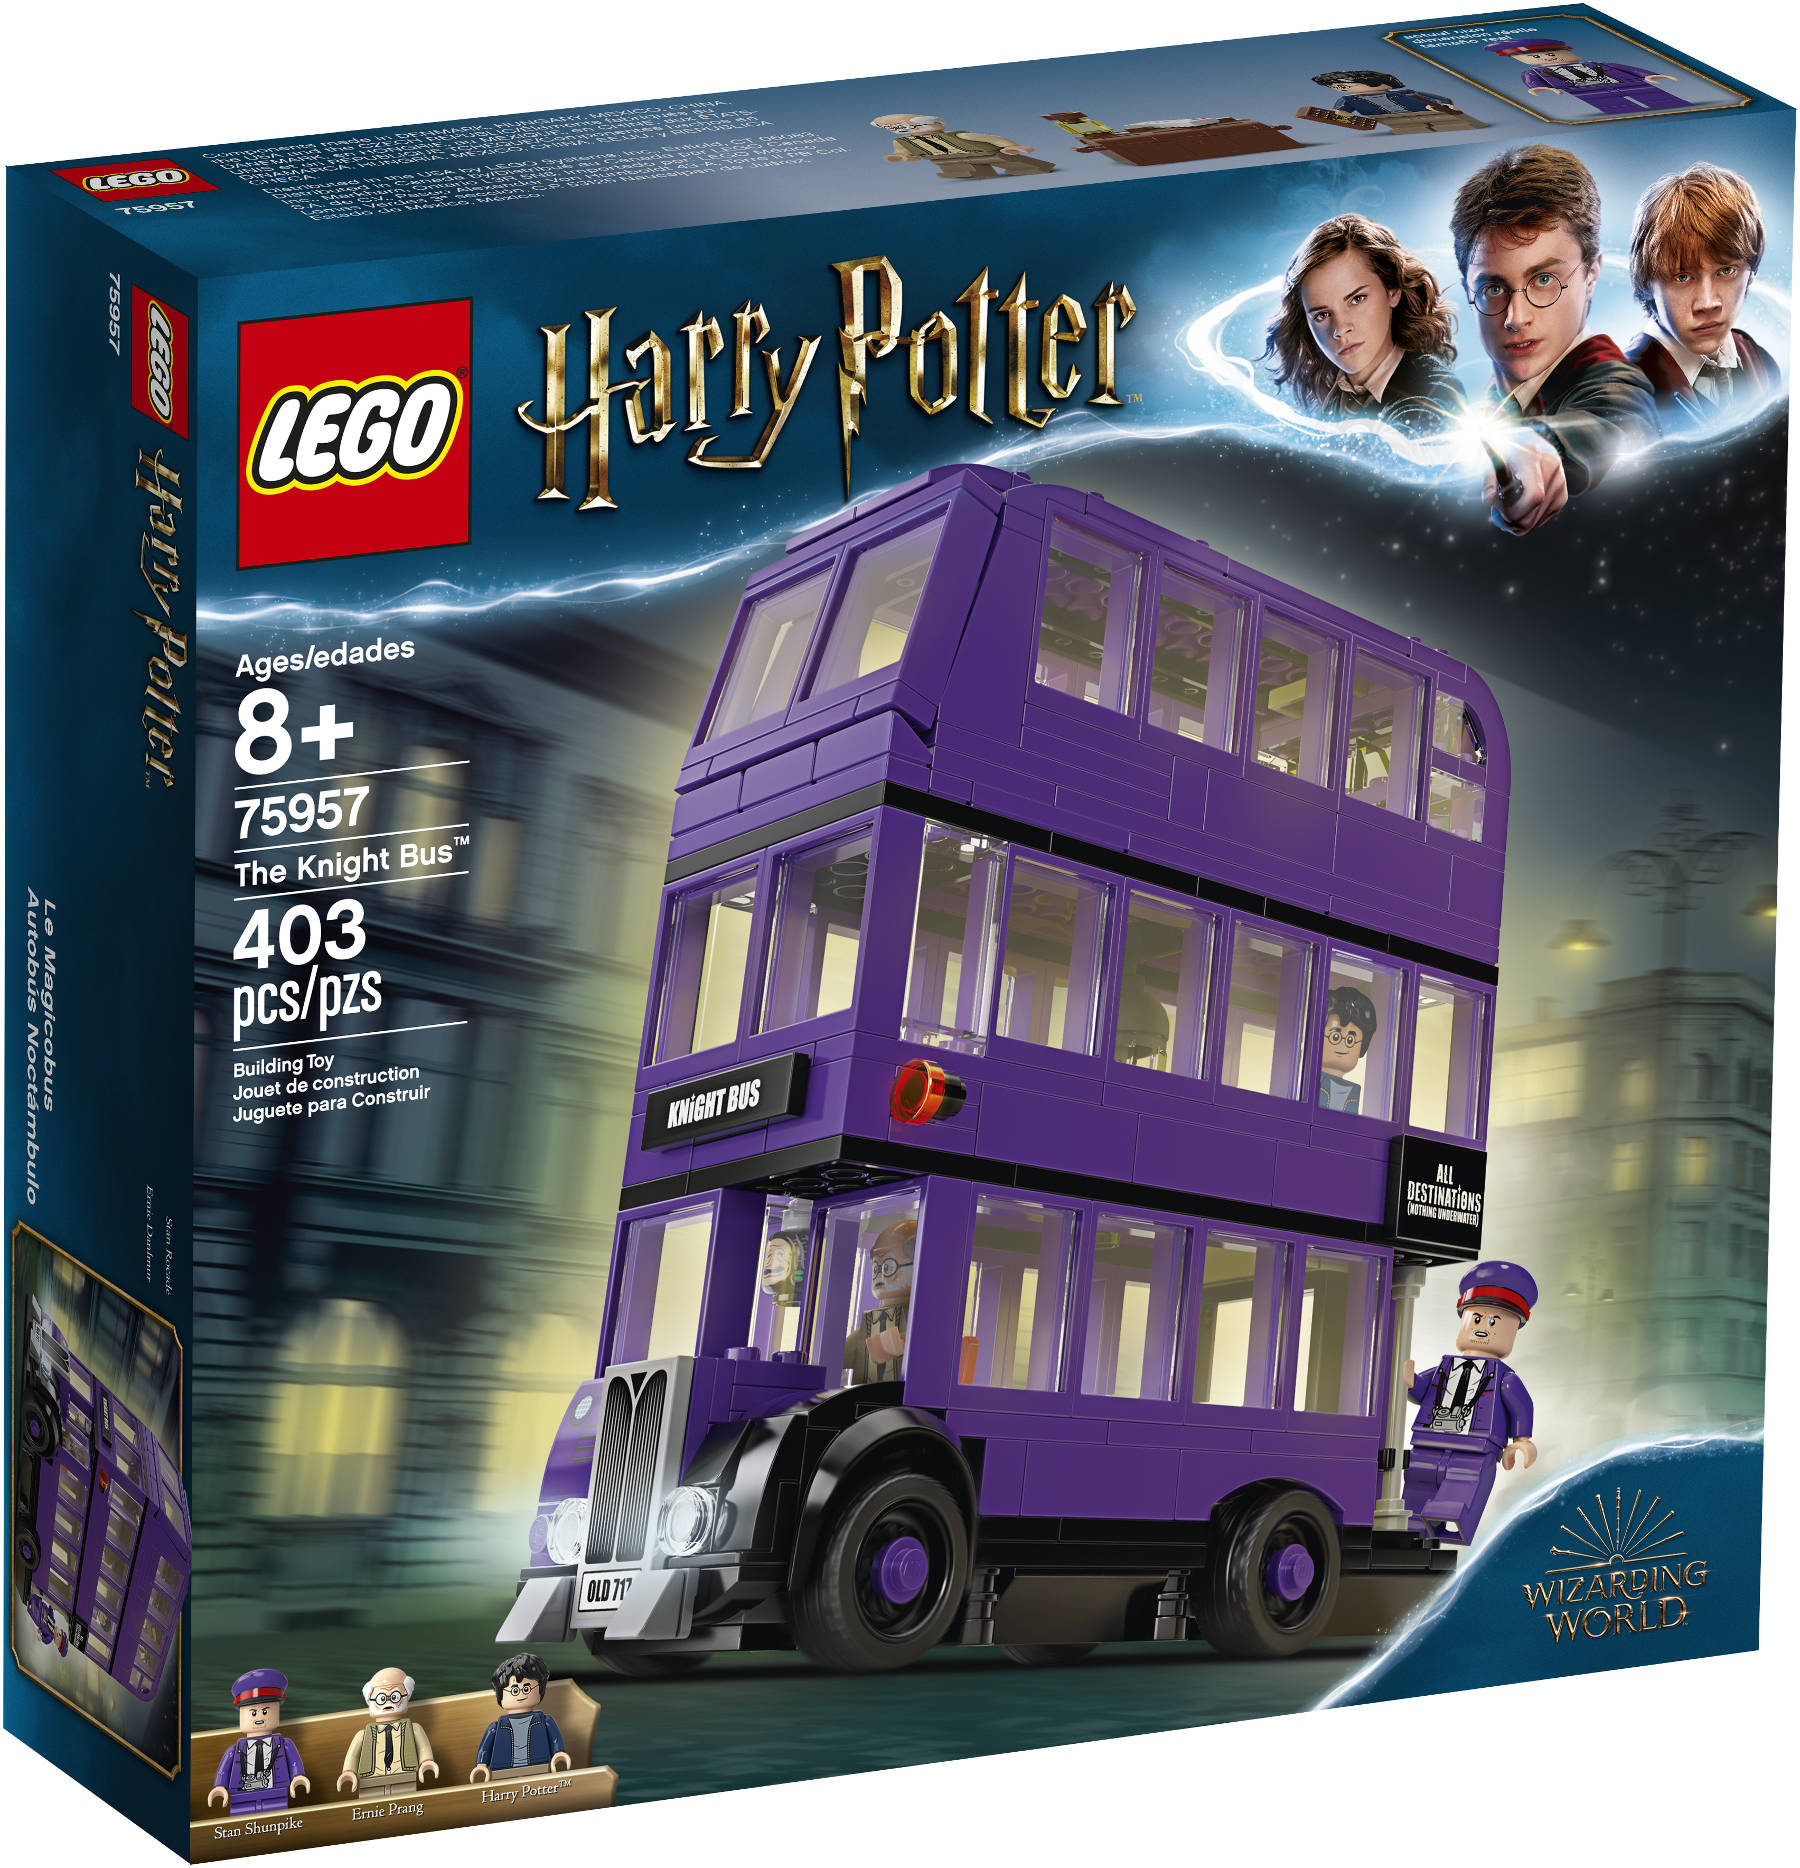 Decent LEGO Harry Potter Sale At Target, Amazon - FBTB